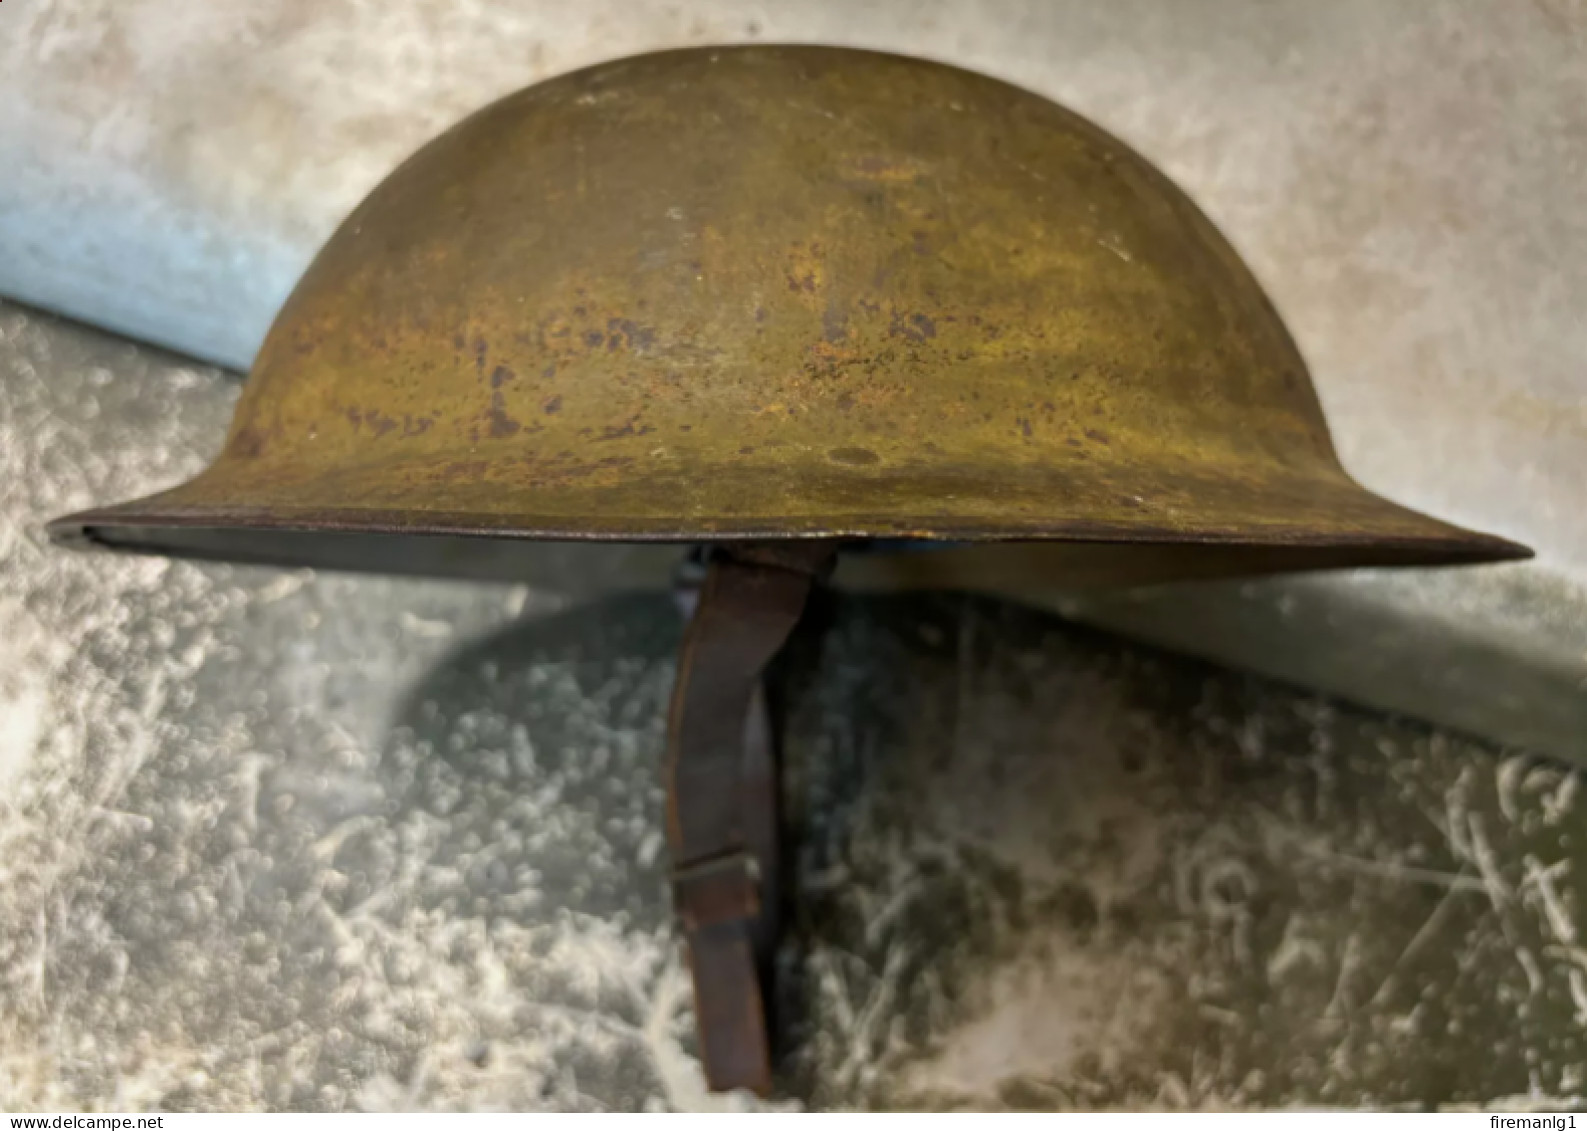 WW1 British / Australian Brodie Pattern Steel Helmet Mk.I (ANZAC - AIF) – 1917 - Casques & Coiffures